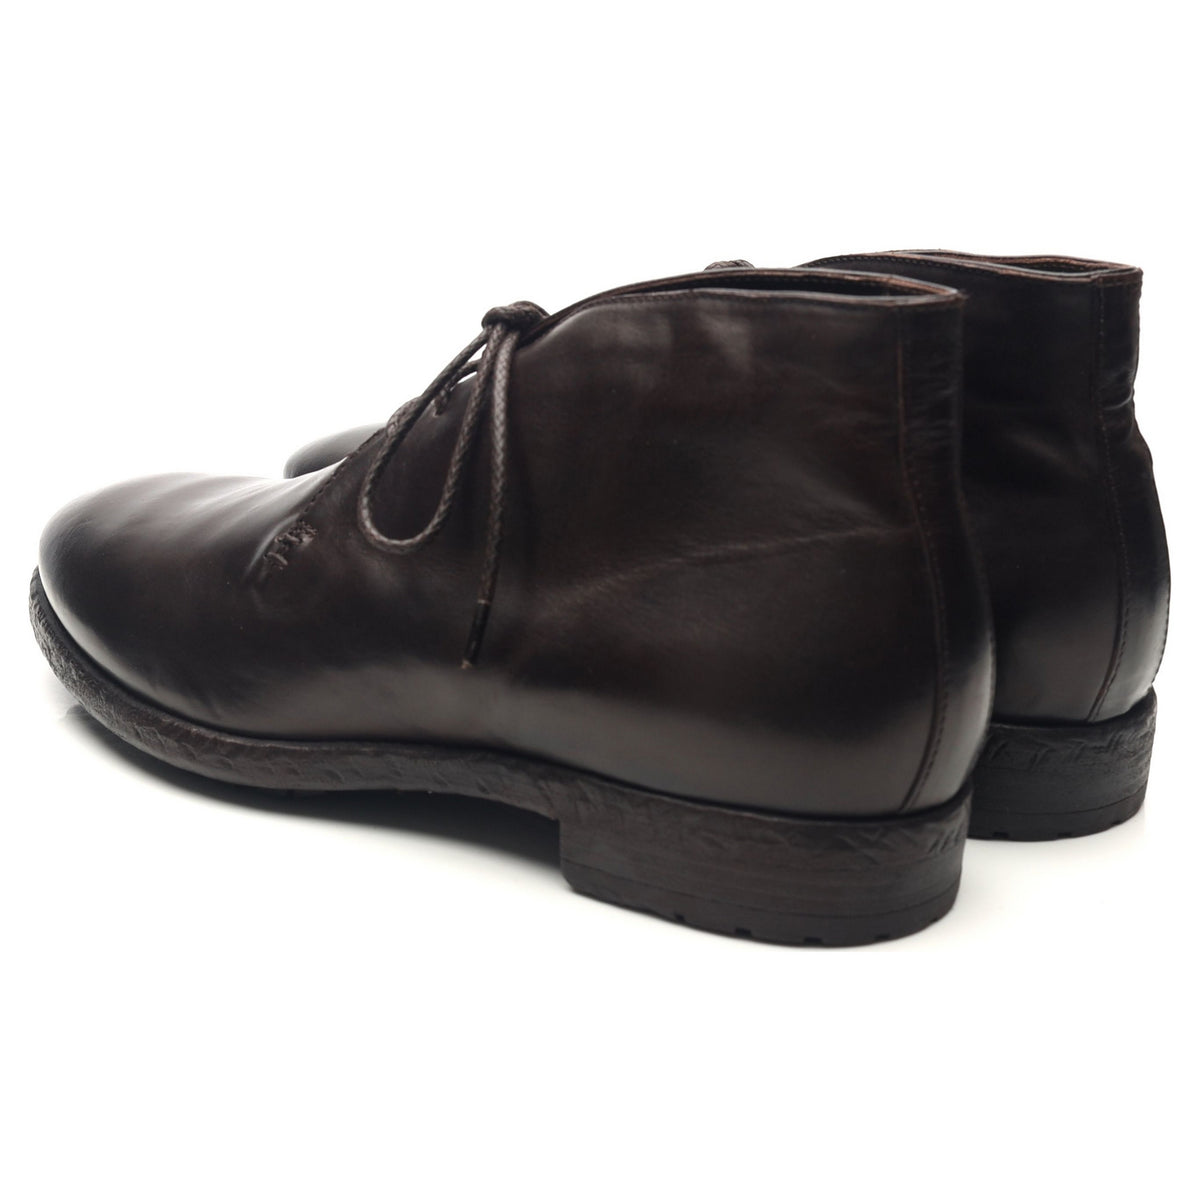 Dark Brown Leather Chukka Boots UK 6 EU 40